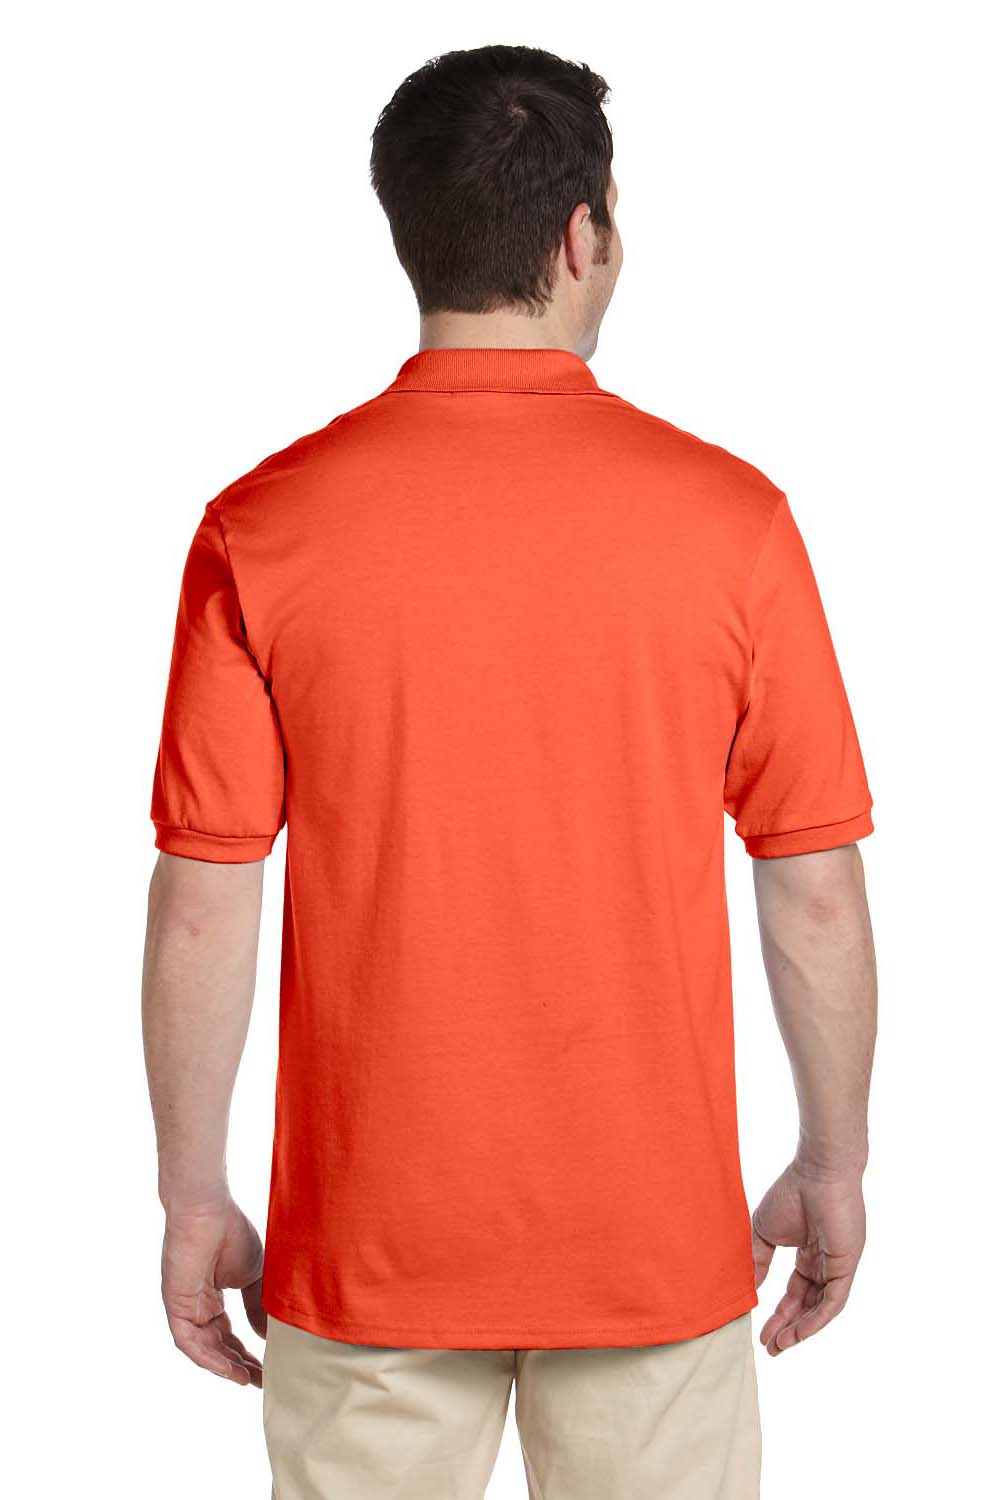 Jerzees 437 Mens SpotShield Stain Resistant Short Sleeve Polo Shirt Burnt Orange Back